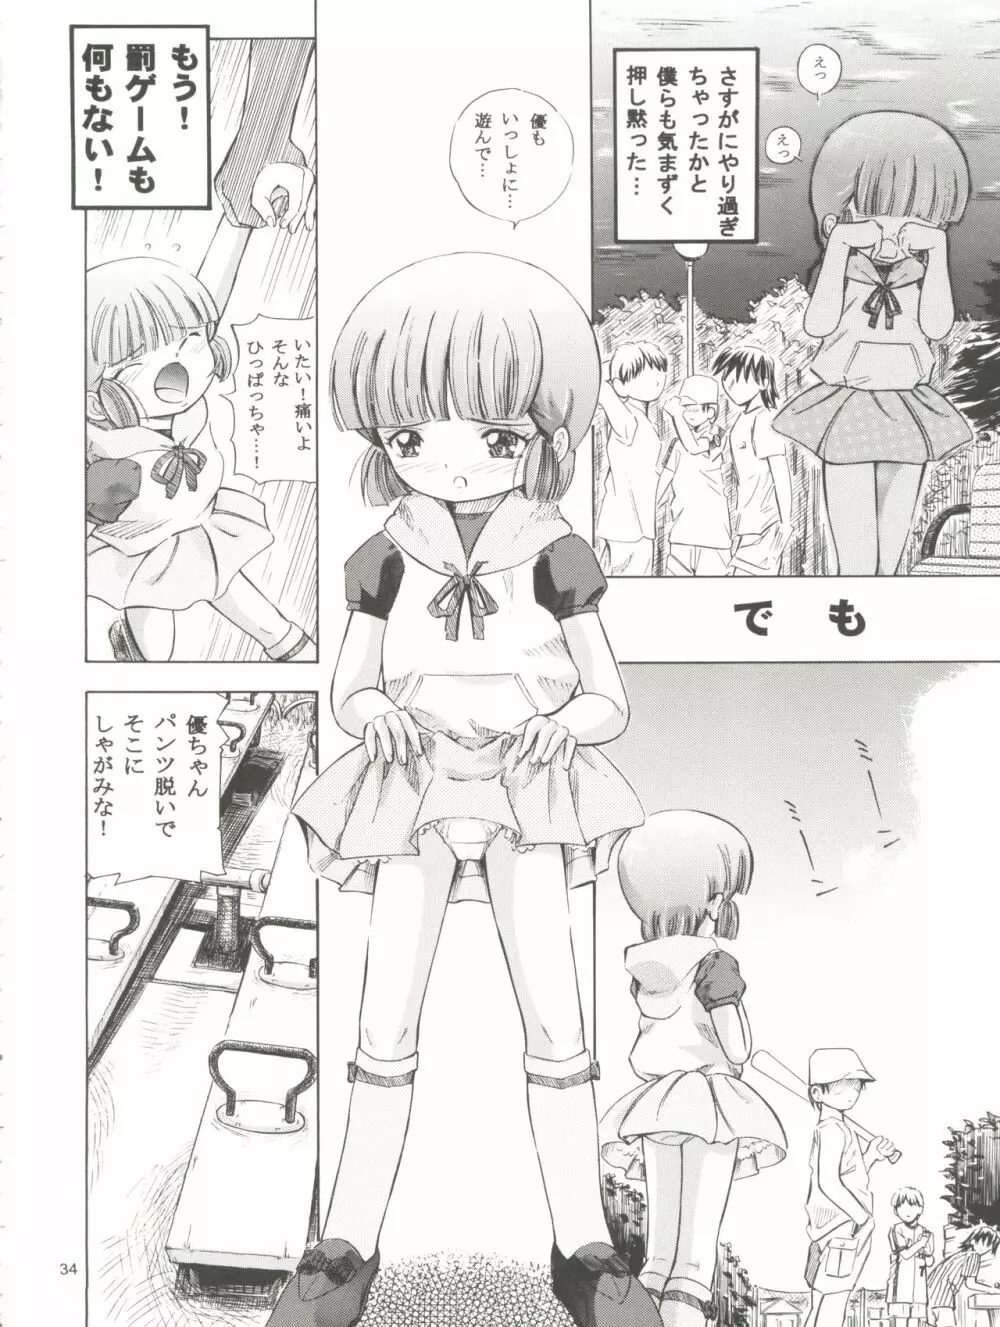 魔法旧式 17 魔女っ子丼! - page34